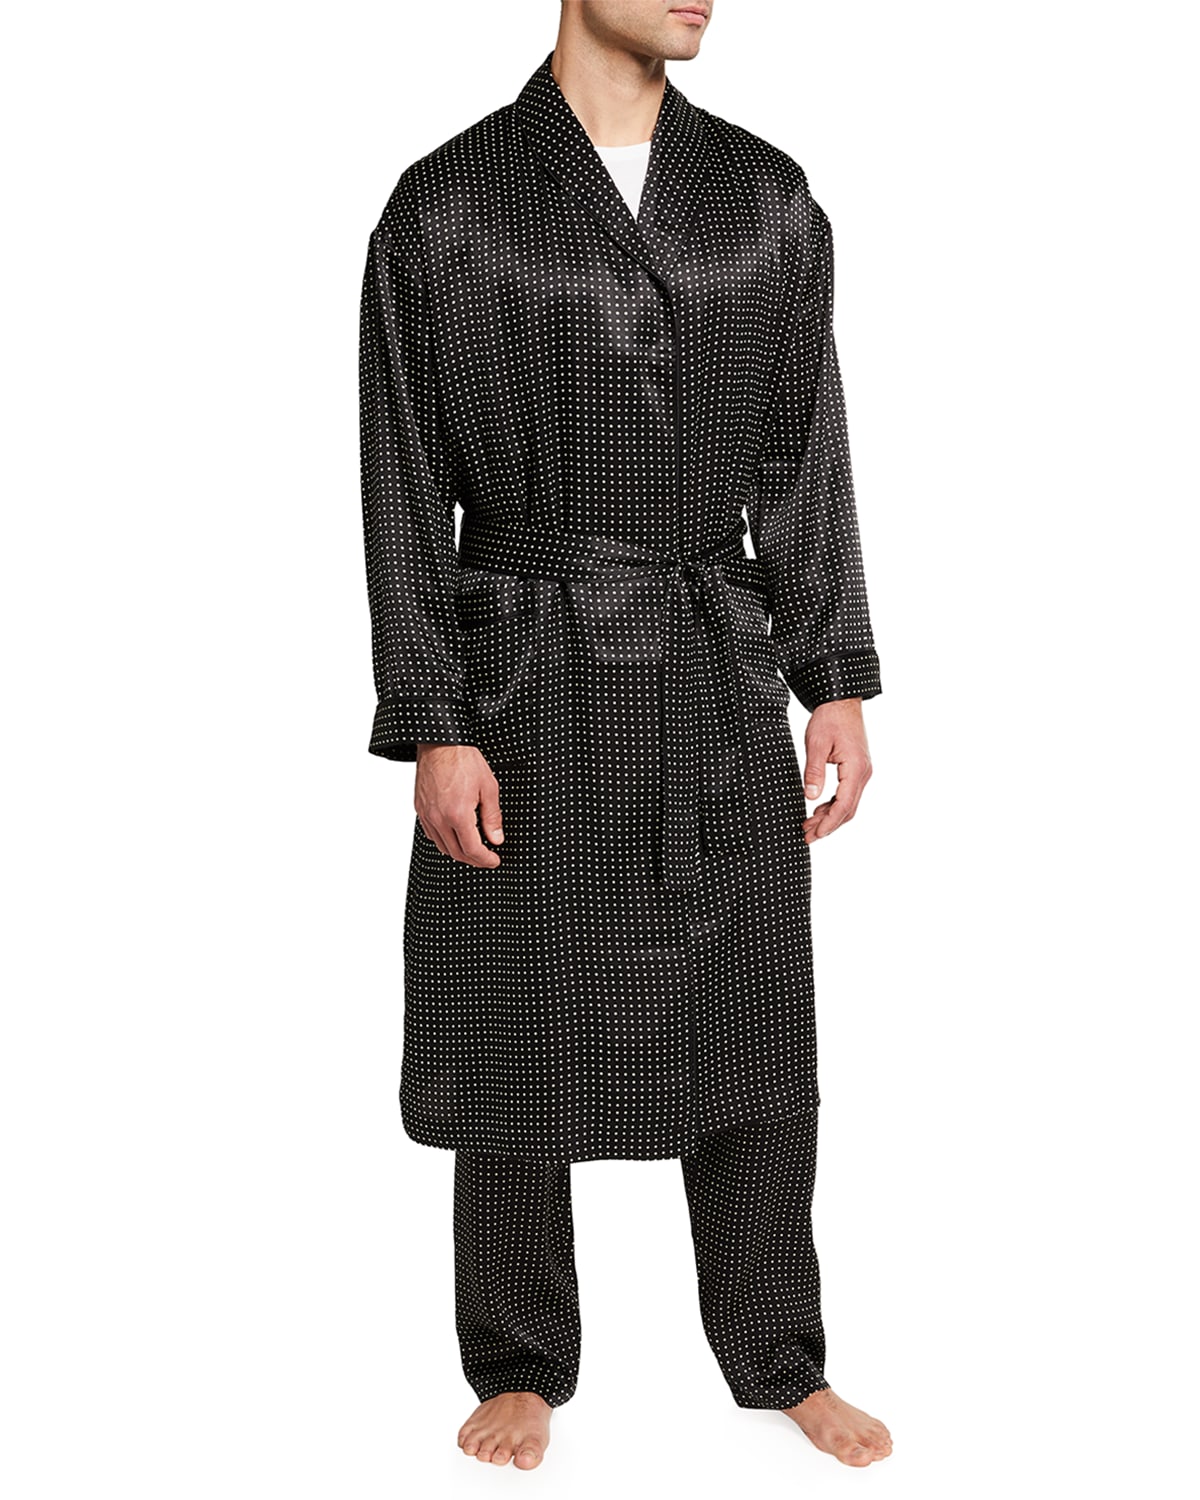 Majestic International Men's Silk Dot Shawl Robe